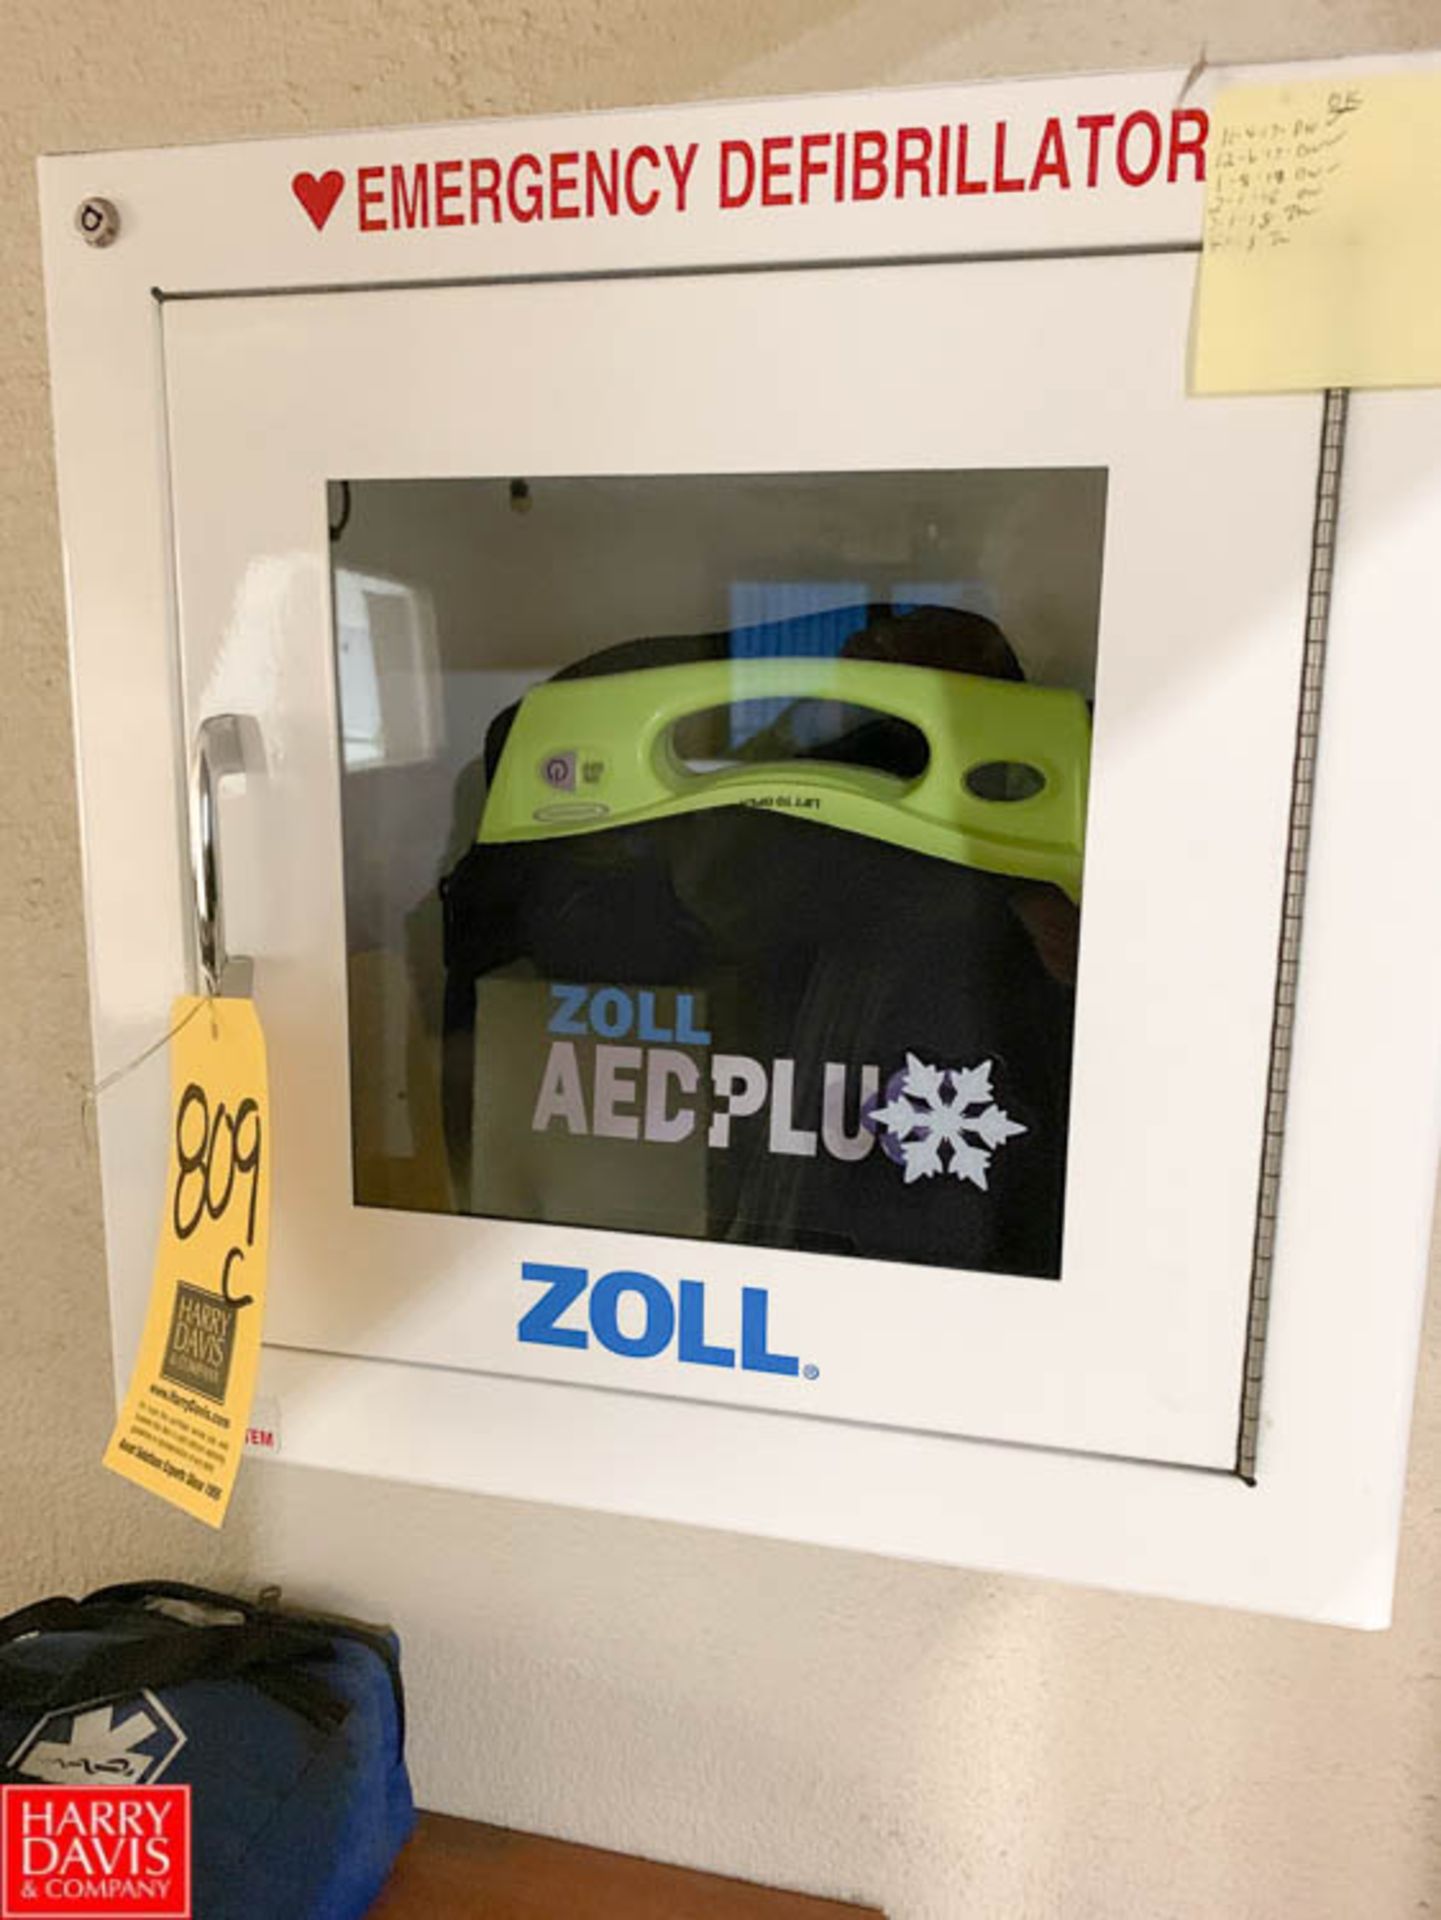 Zoll Defibrillator - Rigging Fee: $15